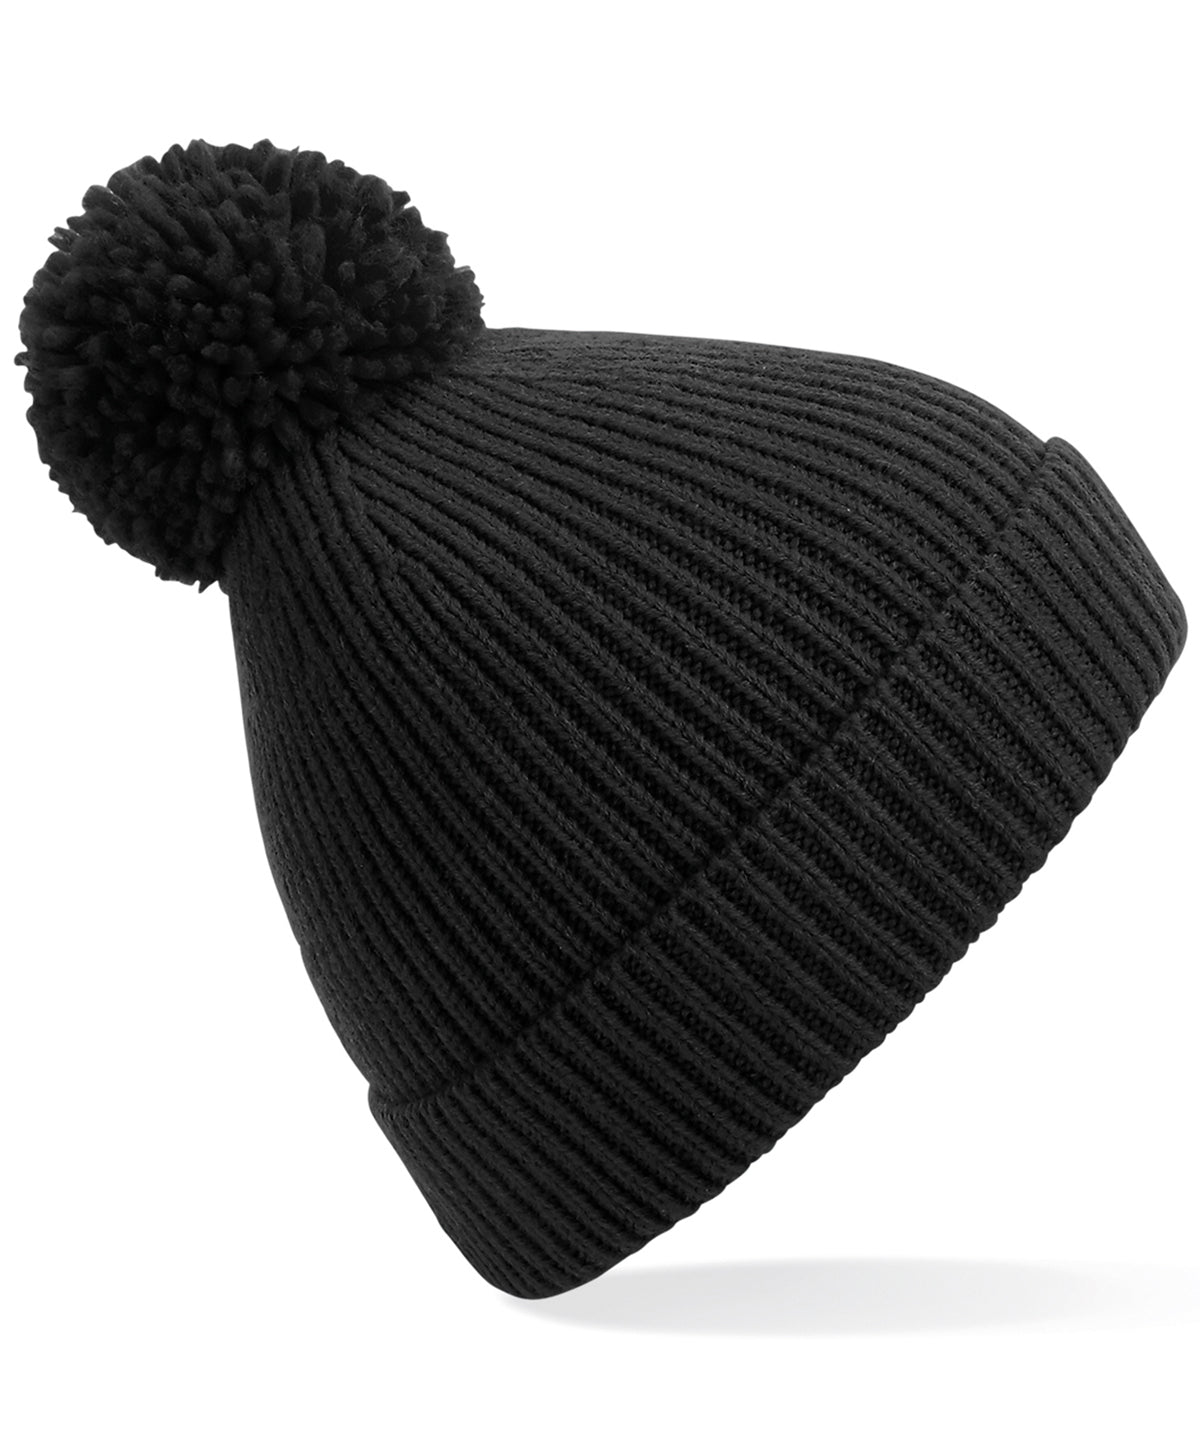 Personalised Hats - Black Beechfield Engineered knit ribbed pom pom beanie